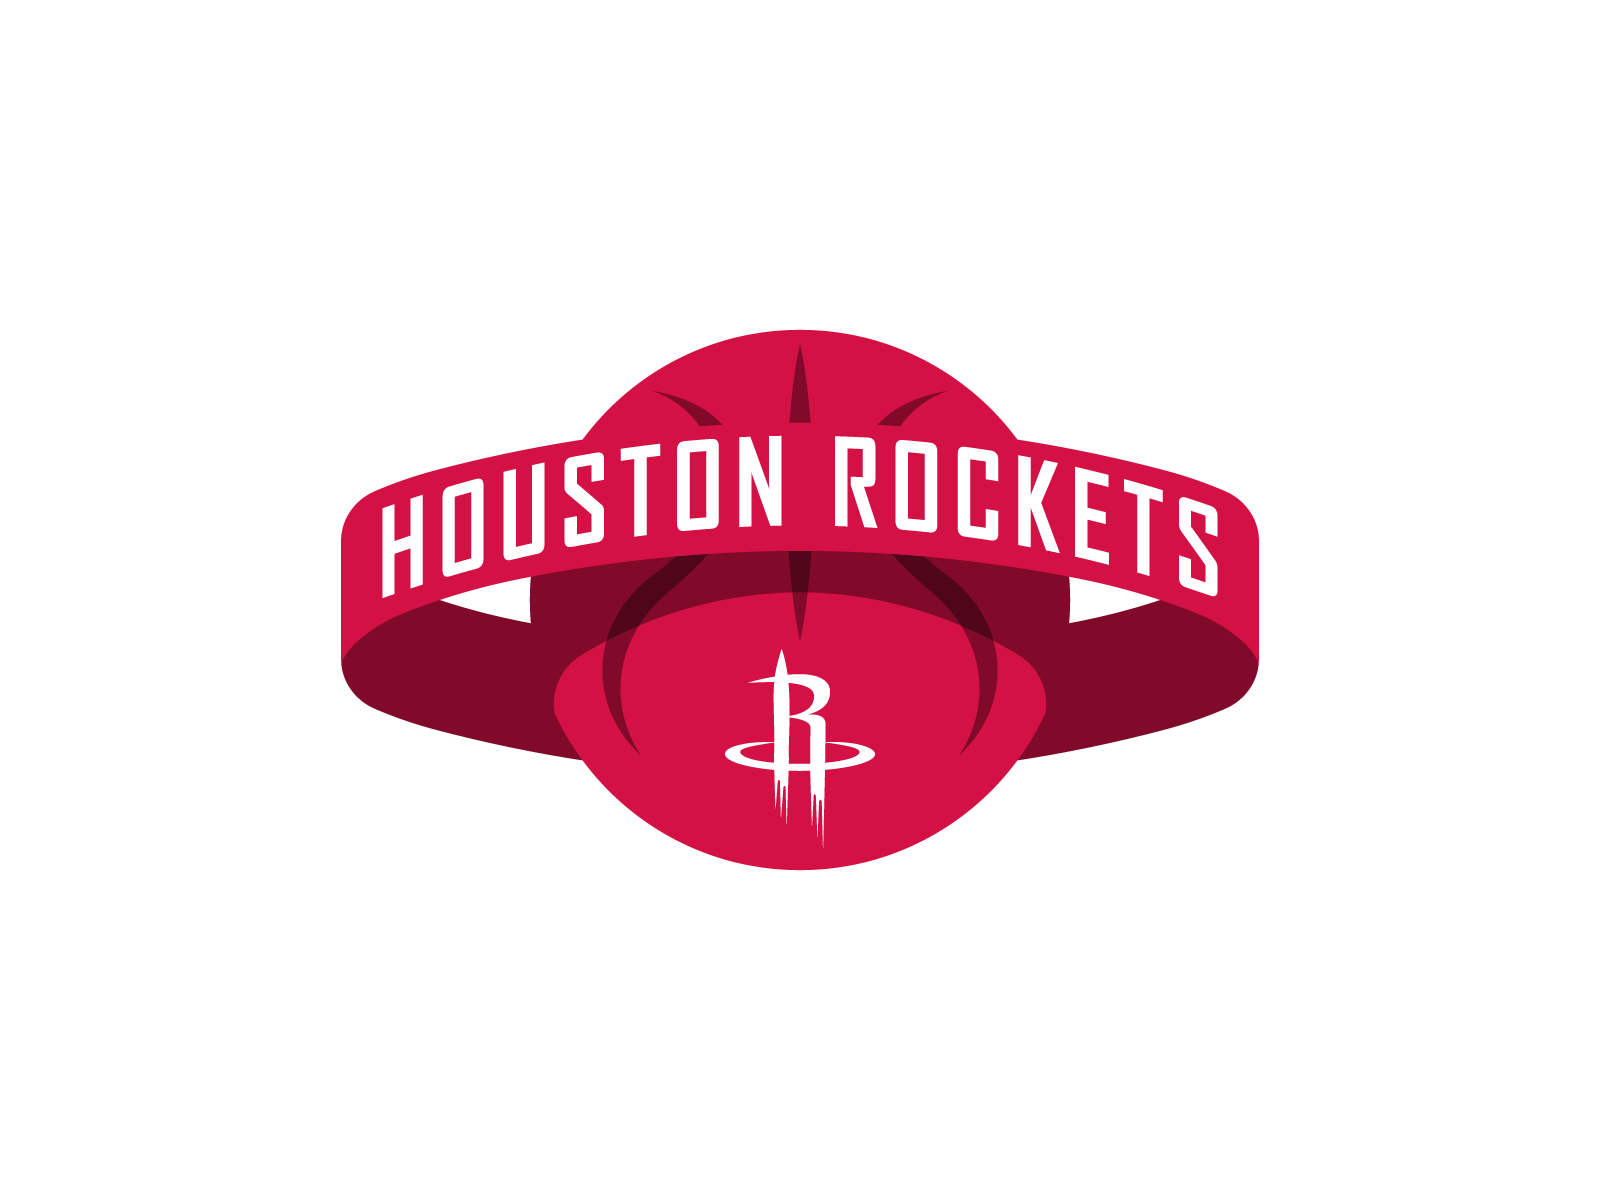 Houston Rockets Concept Logo by Sean McCarthy on Dribbble